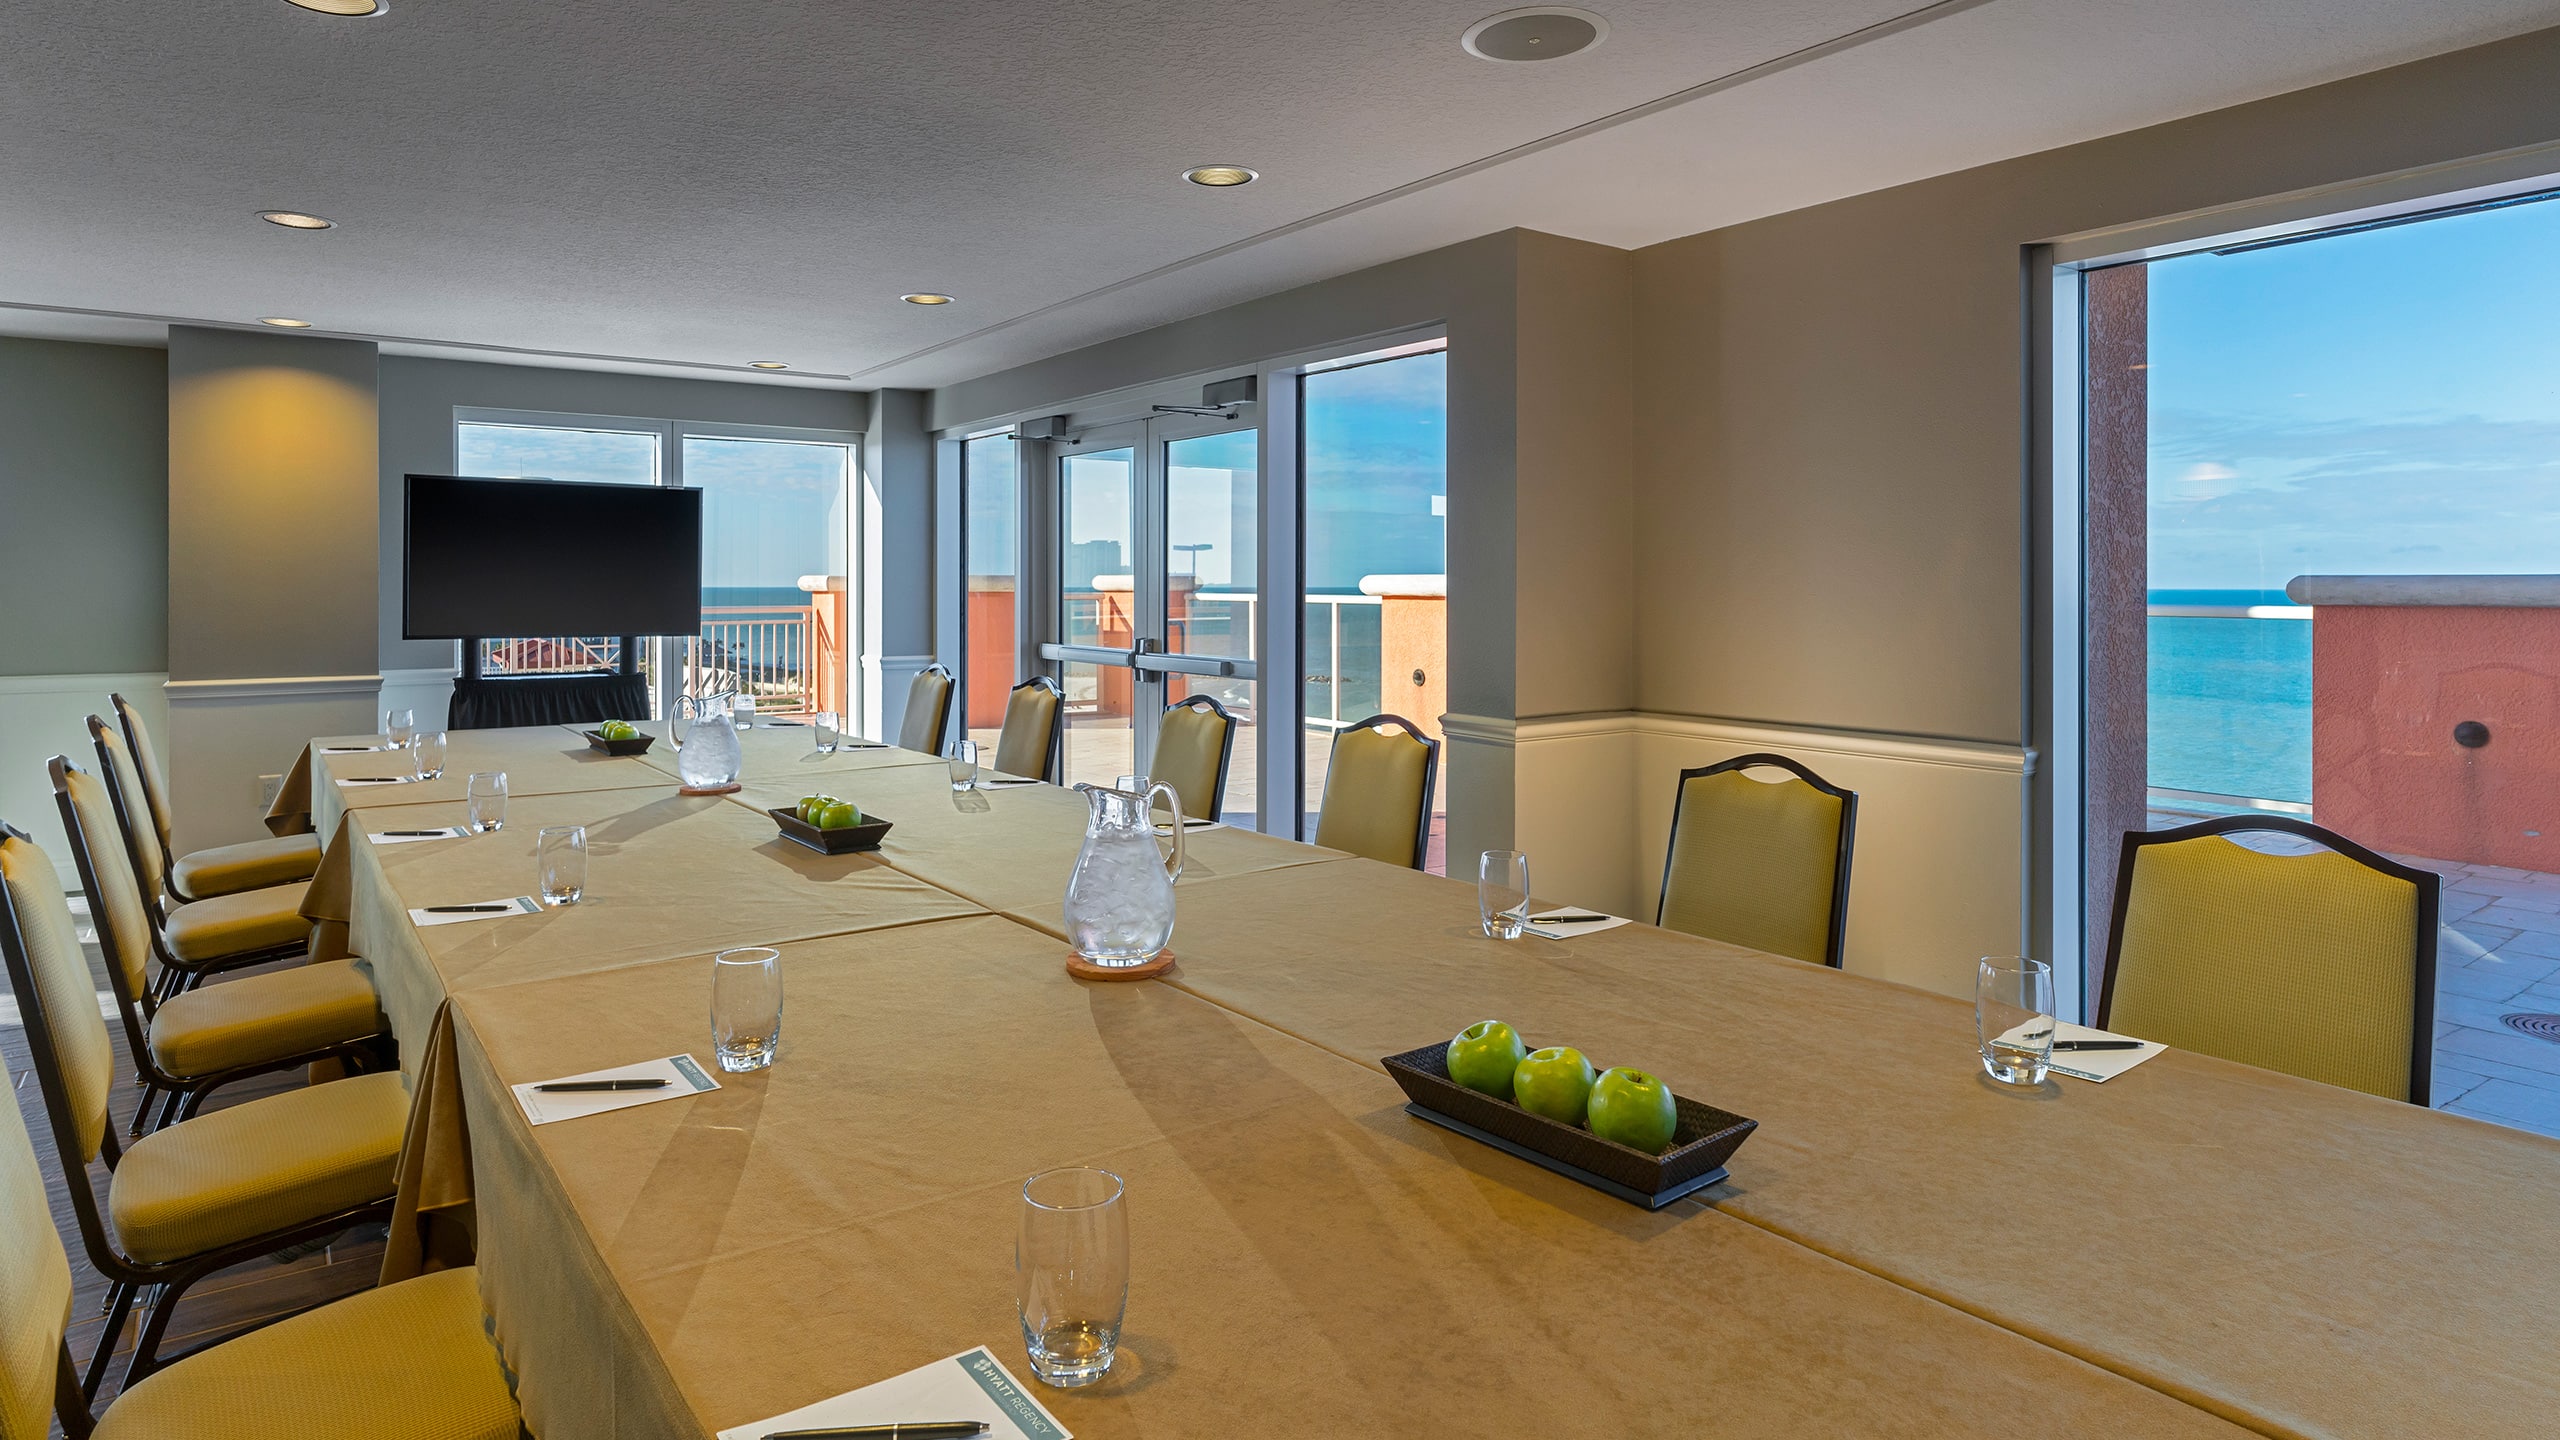 Hyatt Regency Clearwater Beach Resort Caladesi Breakout Room with View